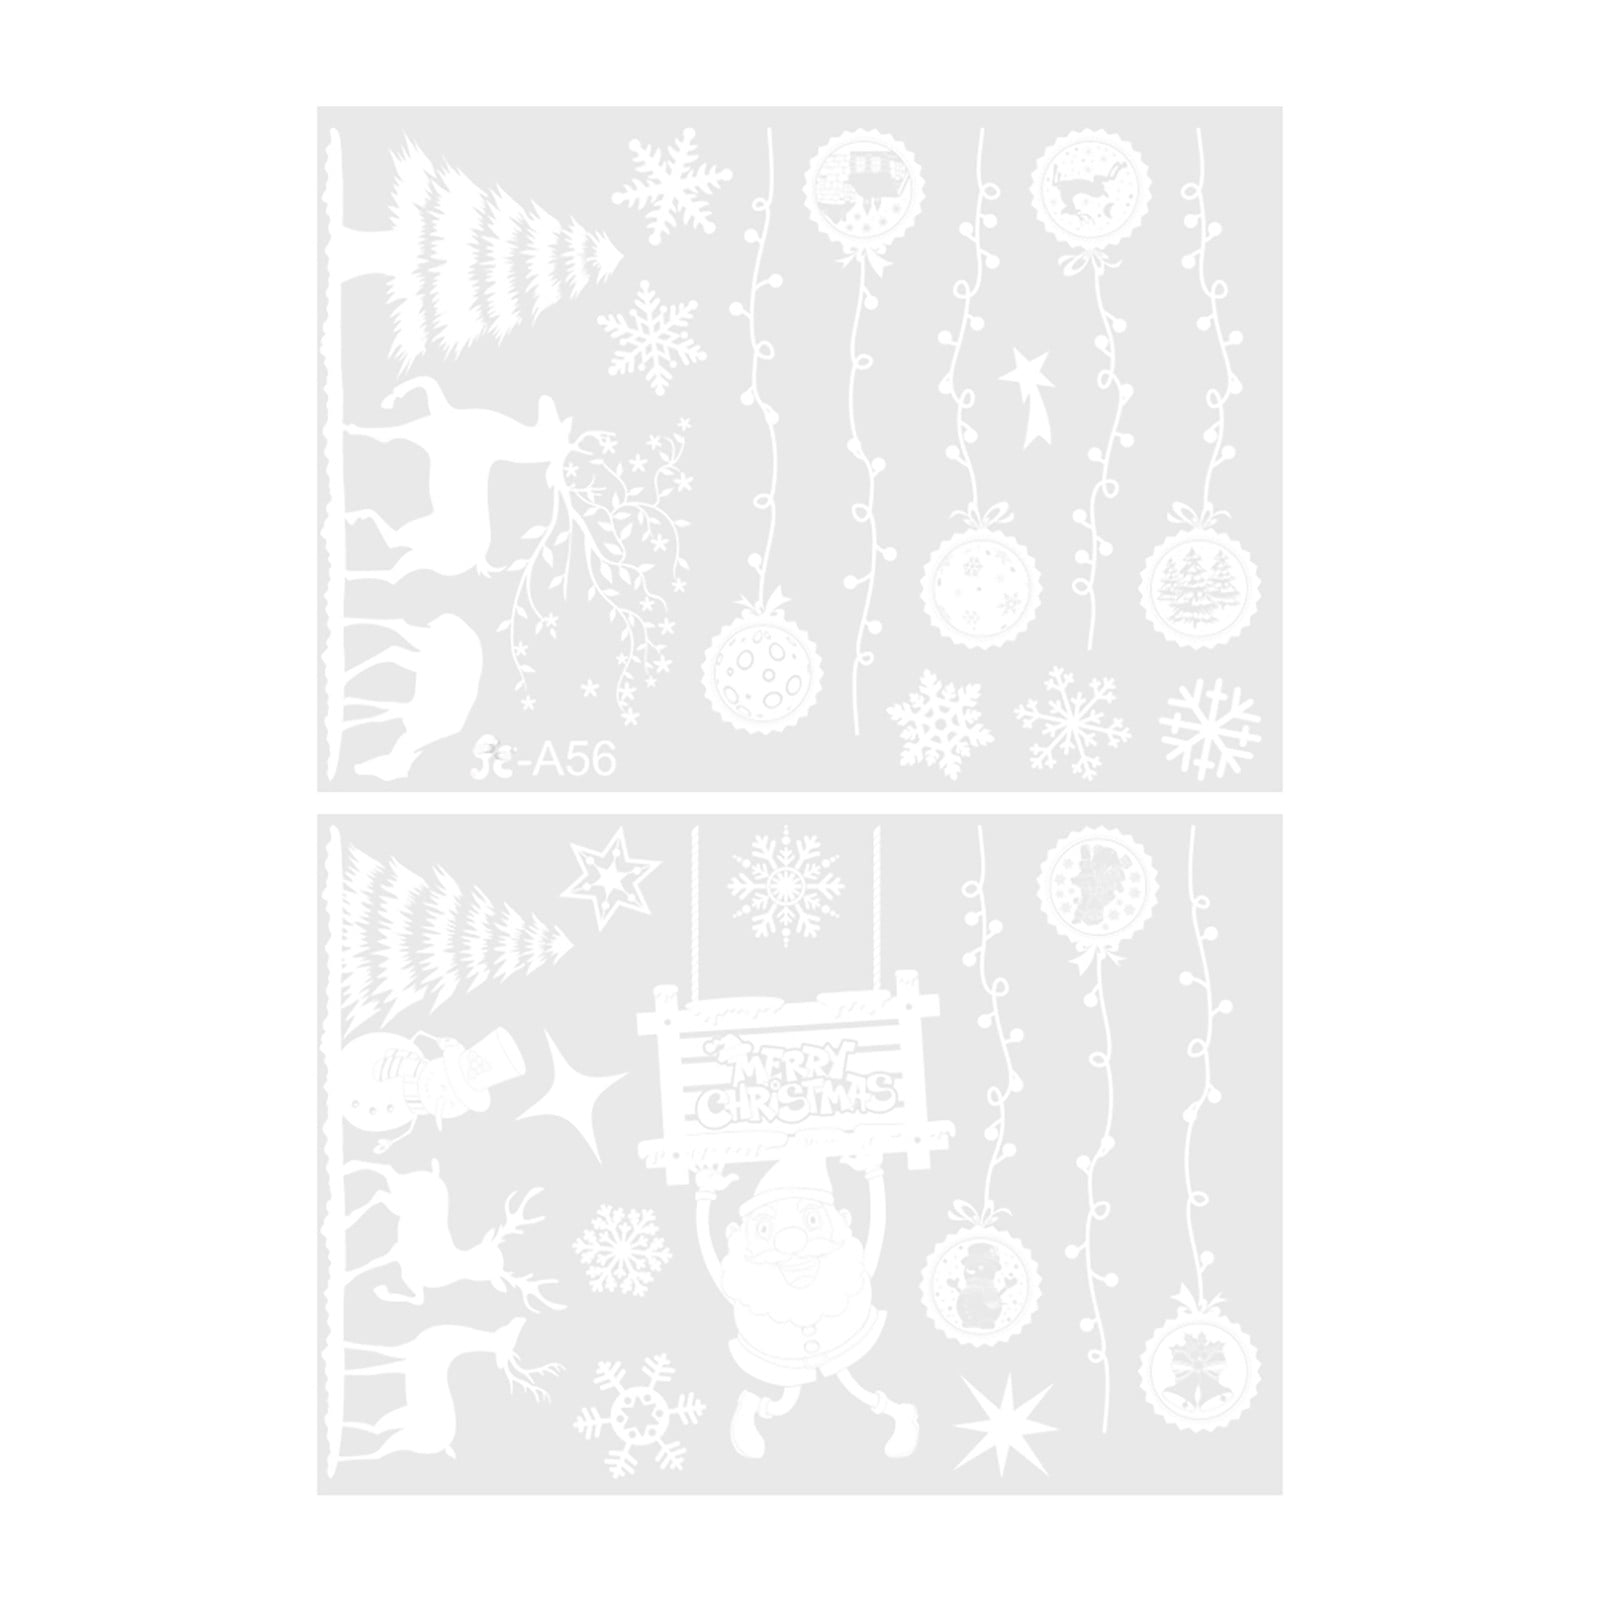 Details about   Christmas Santa Sleigh Reindeer Moon Window Scene Sticker 